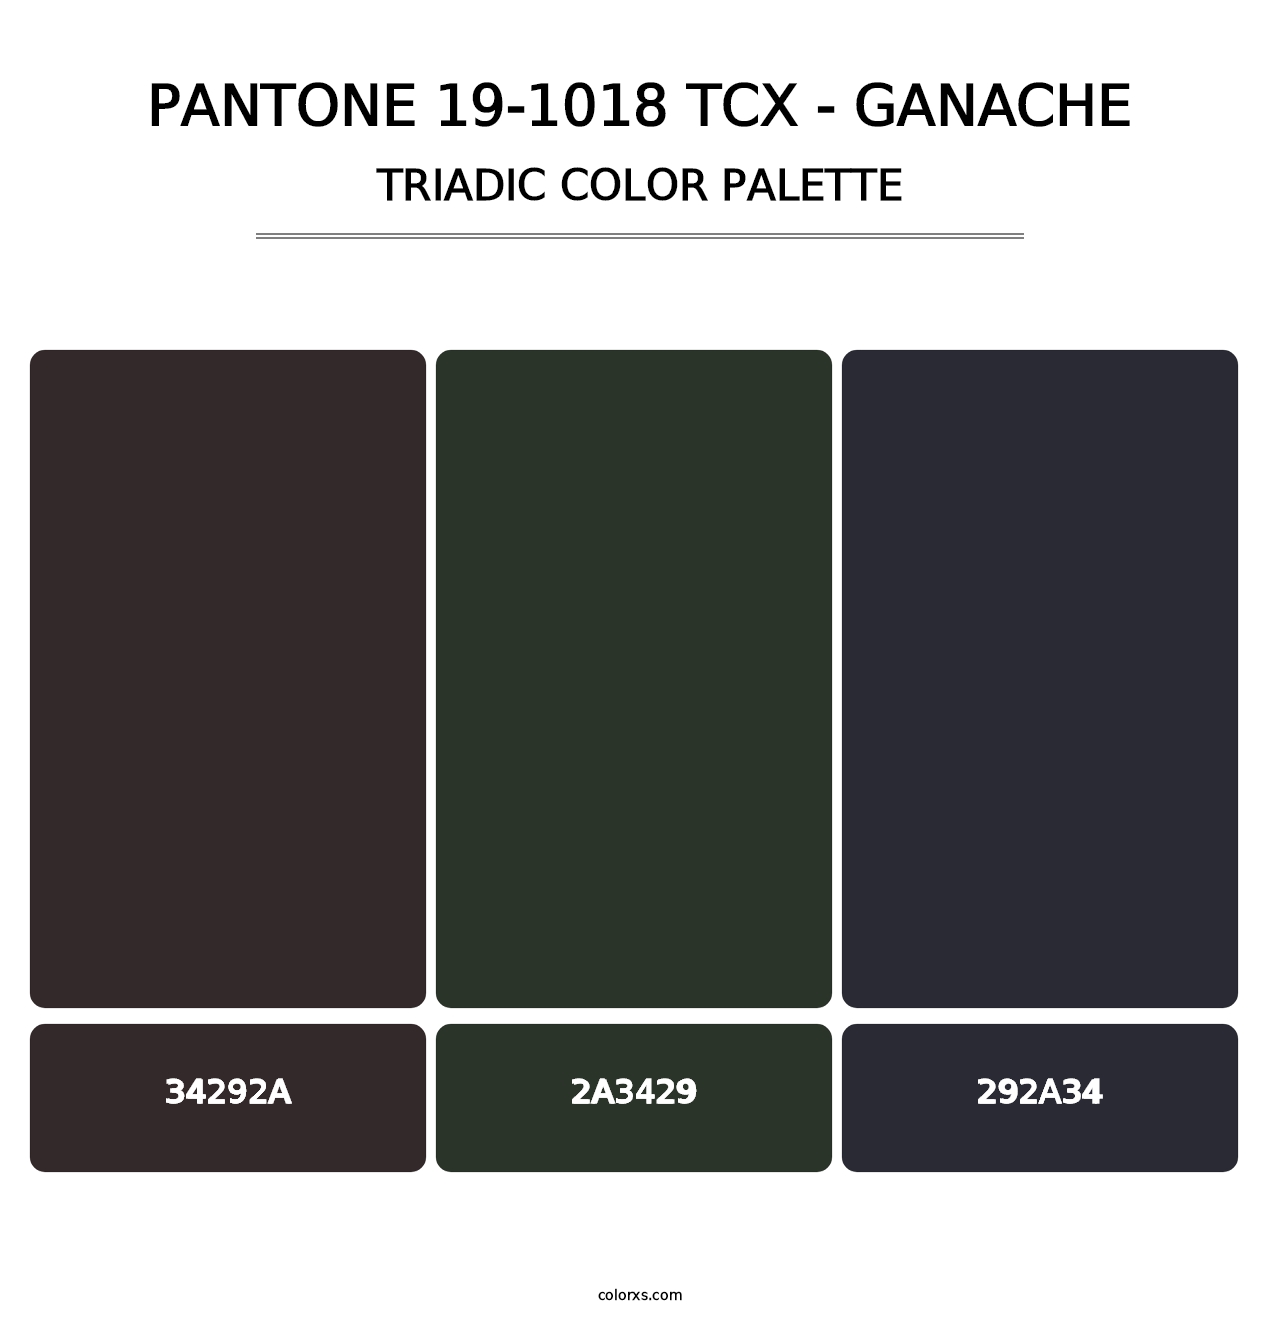 PANTONE 19-1018 TCX - Ganache - Triadic Color Palette